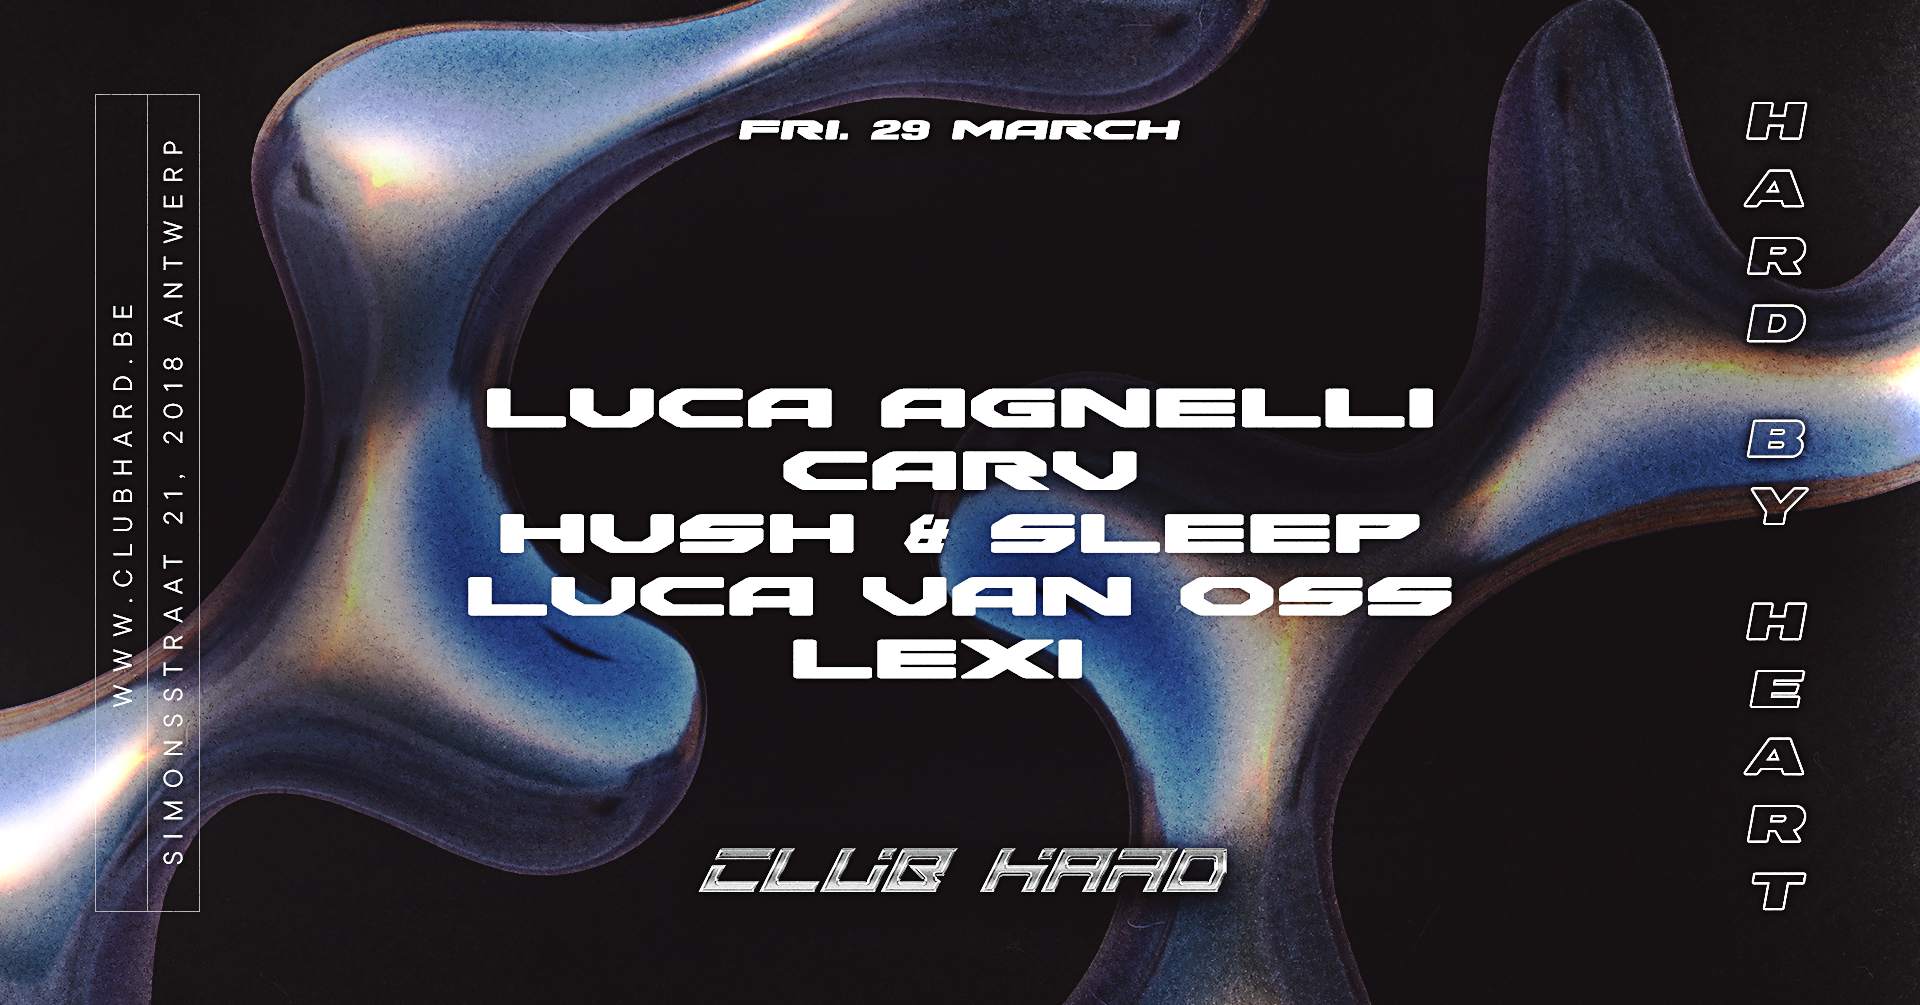 Club Hard W/ Luca Agnelli, CARV, Hush & Sleep, Luca van Oss, LEXI - フライヤー表